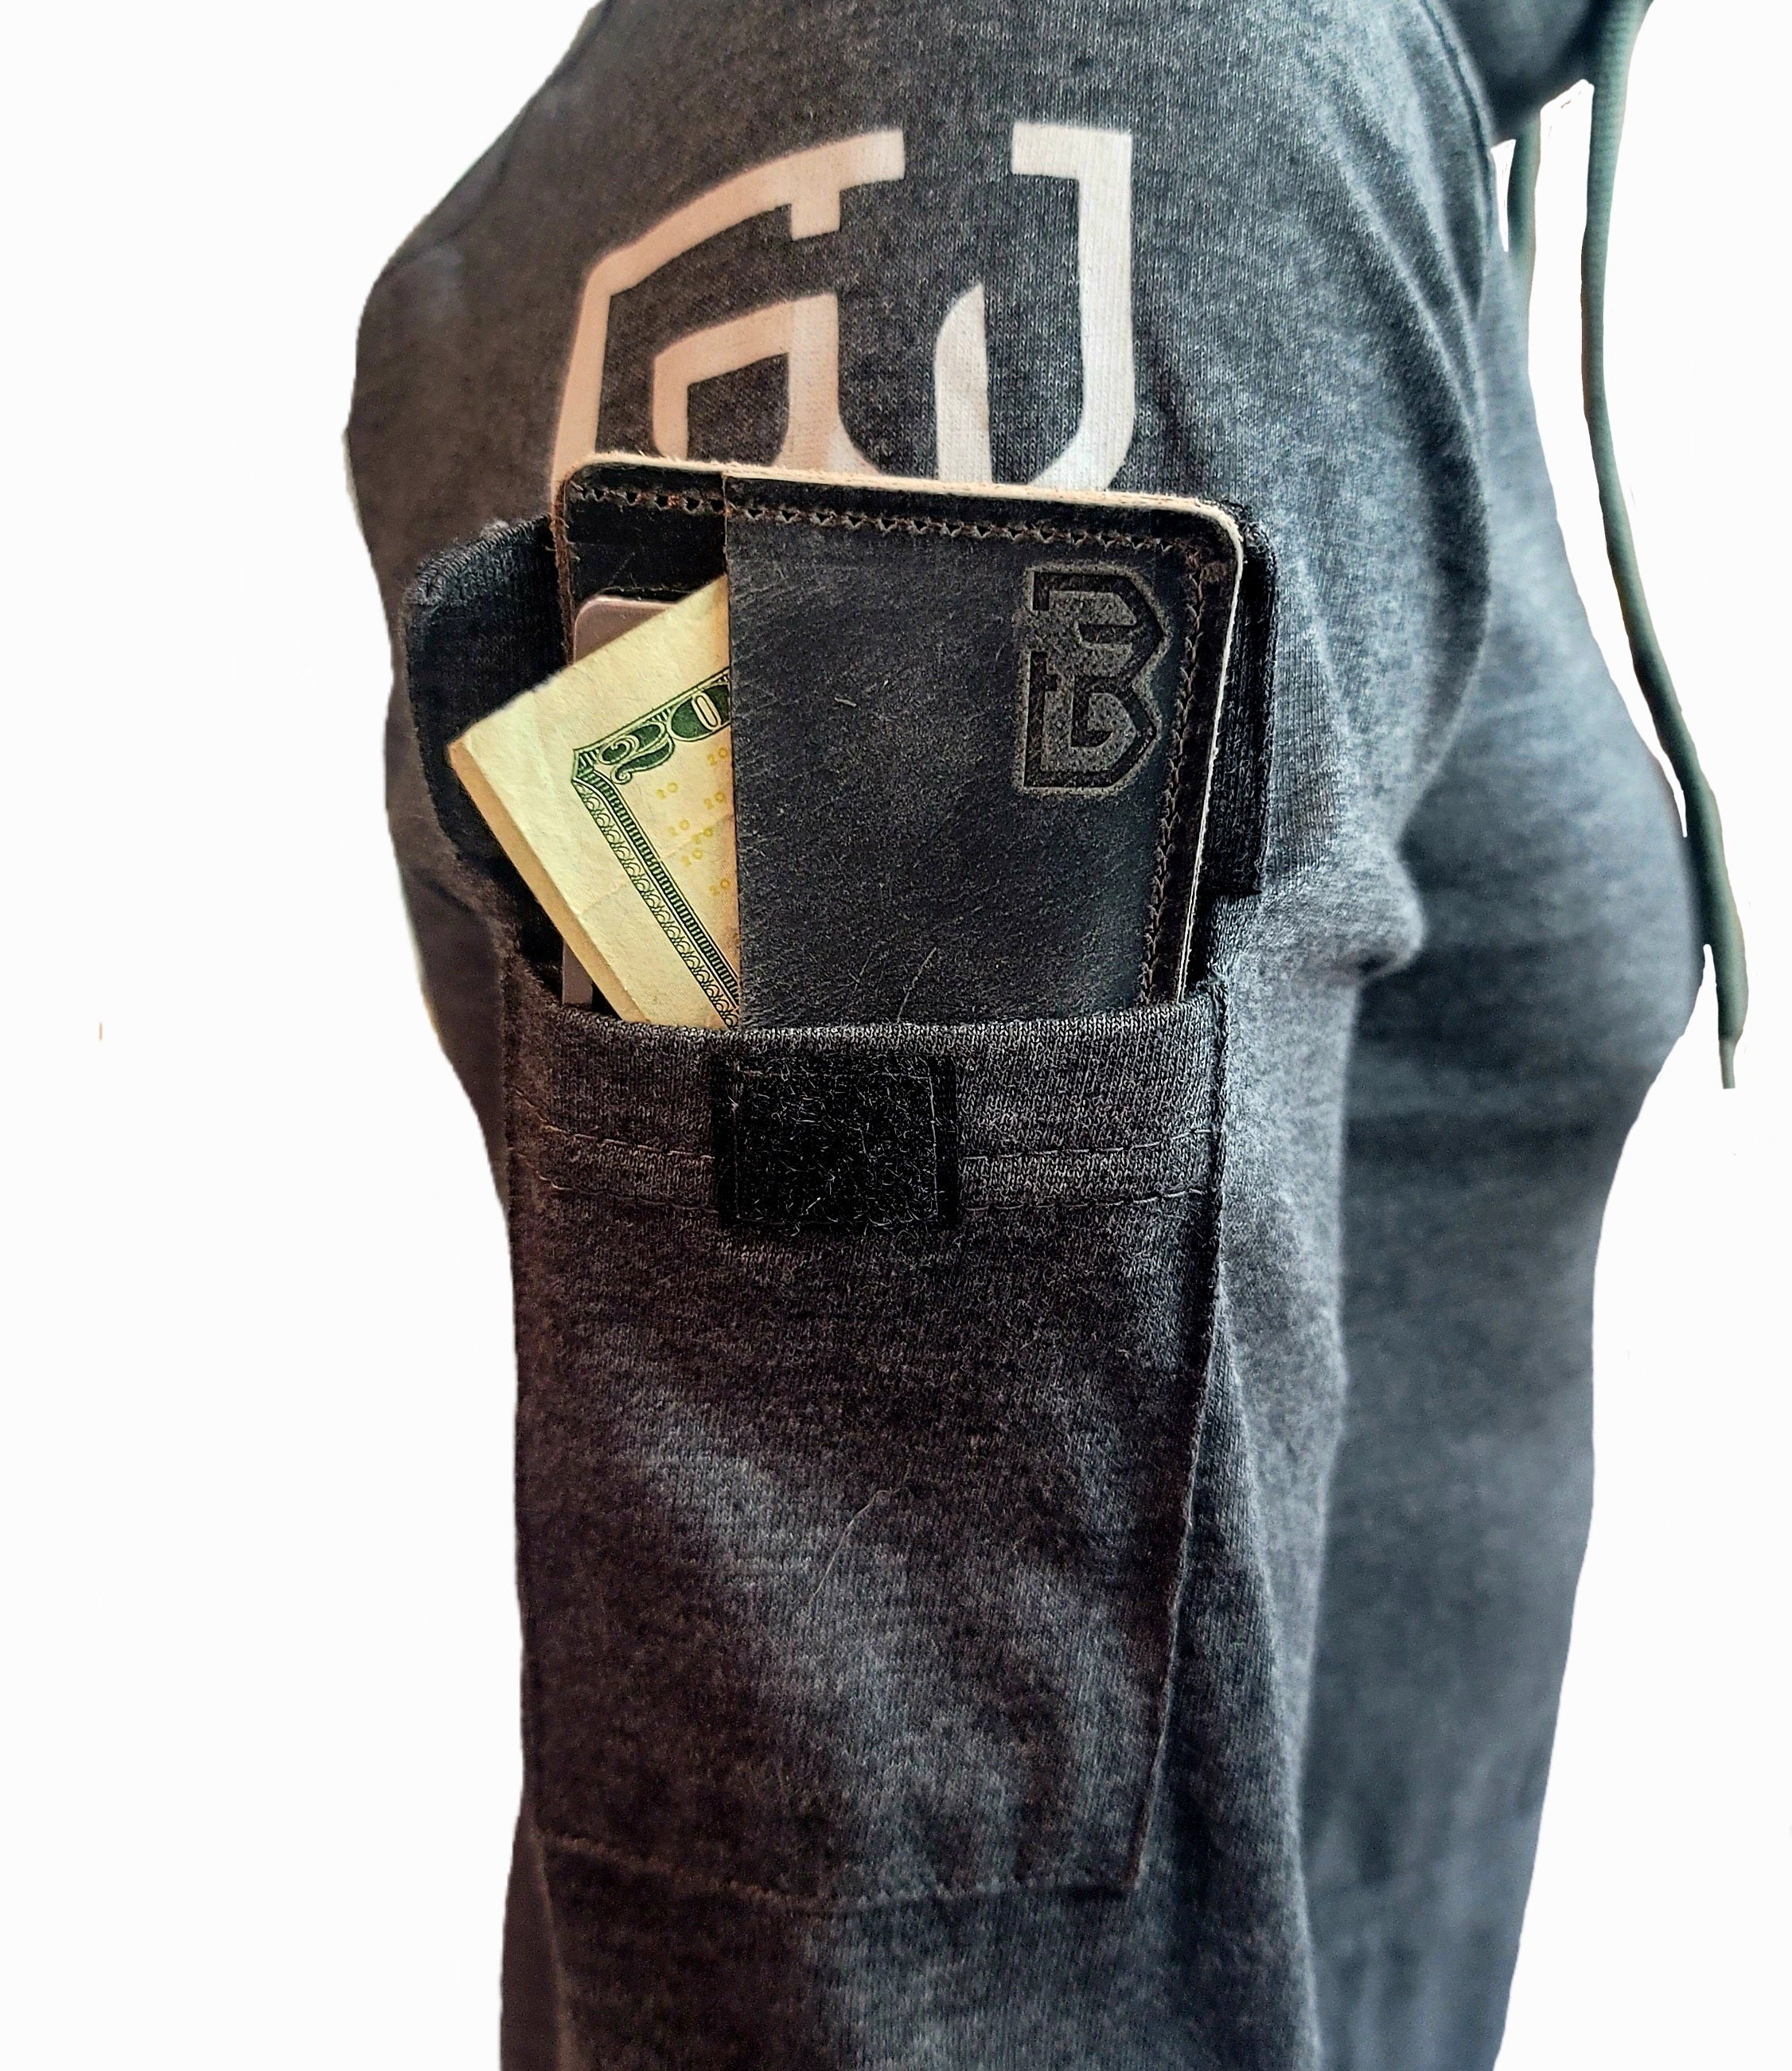 Smart Pickpocket Proof Unisex Hoodie with 4 Secret Pockets